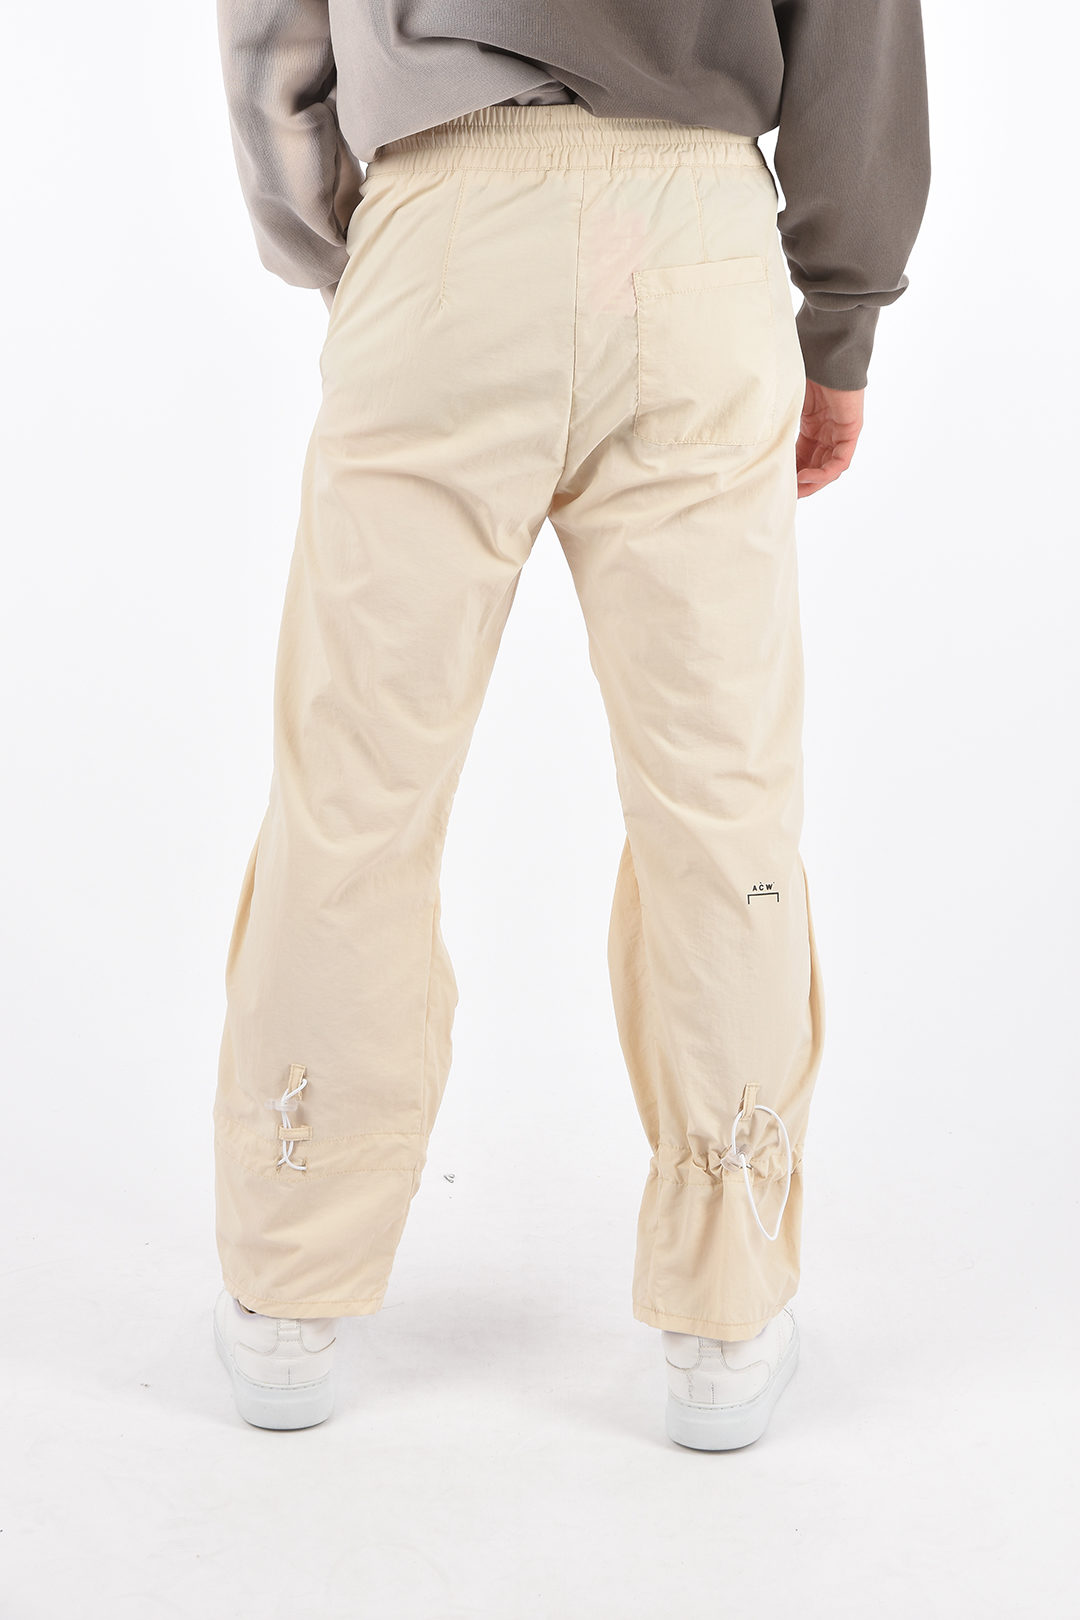 A-COLD-WALL* Sweatpants Men Women High Quality ACW Jogger A COLD WALL  Drawstring Pants - AliExpress